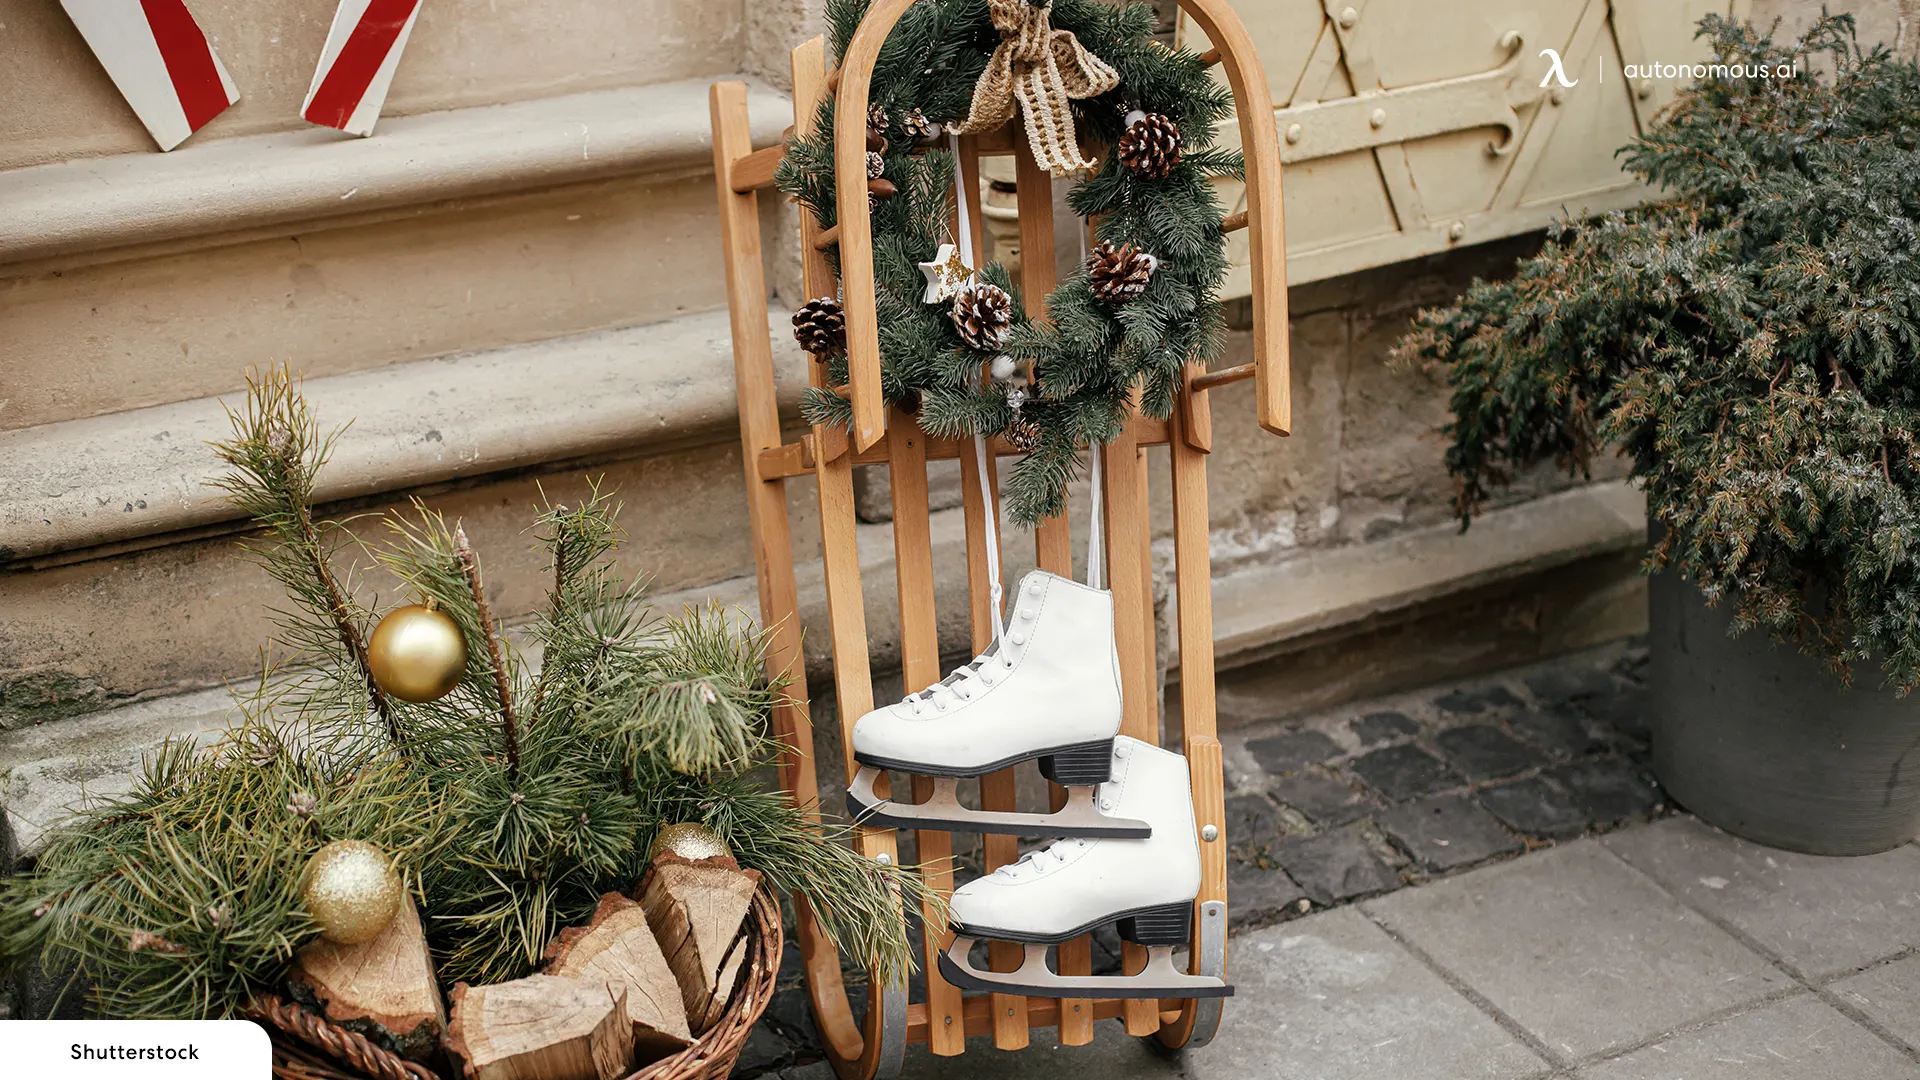 Ice Skate Wreath - DIY Christmas decorations